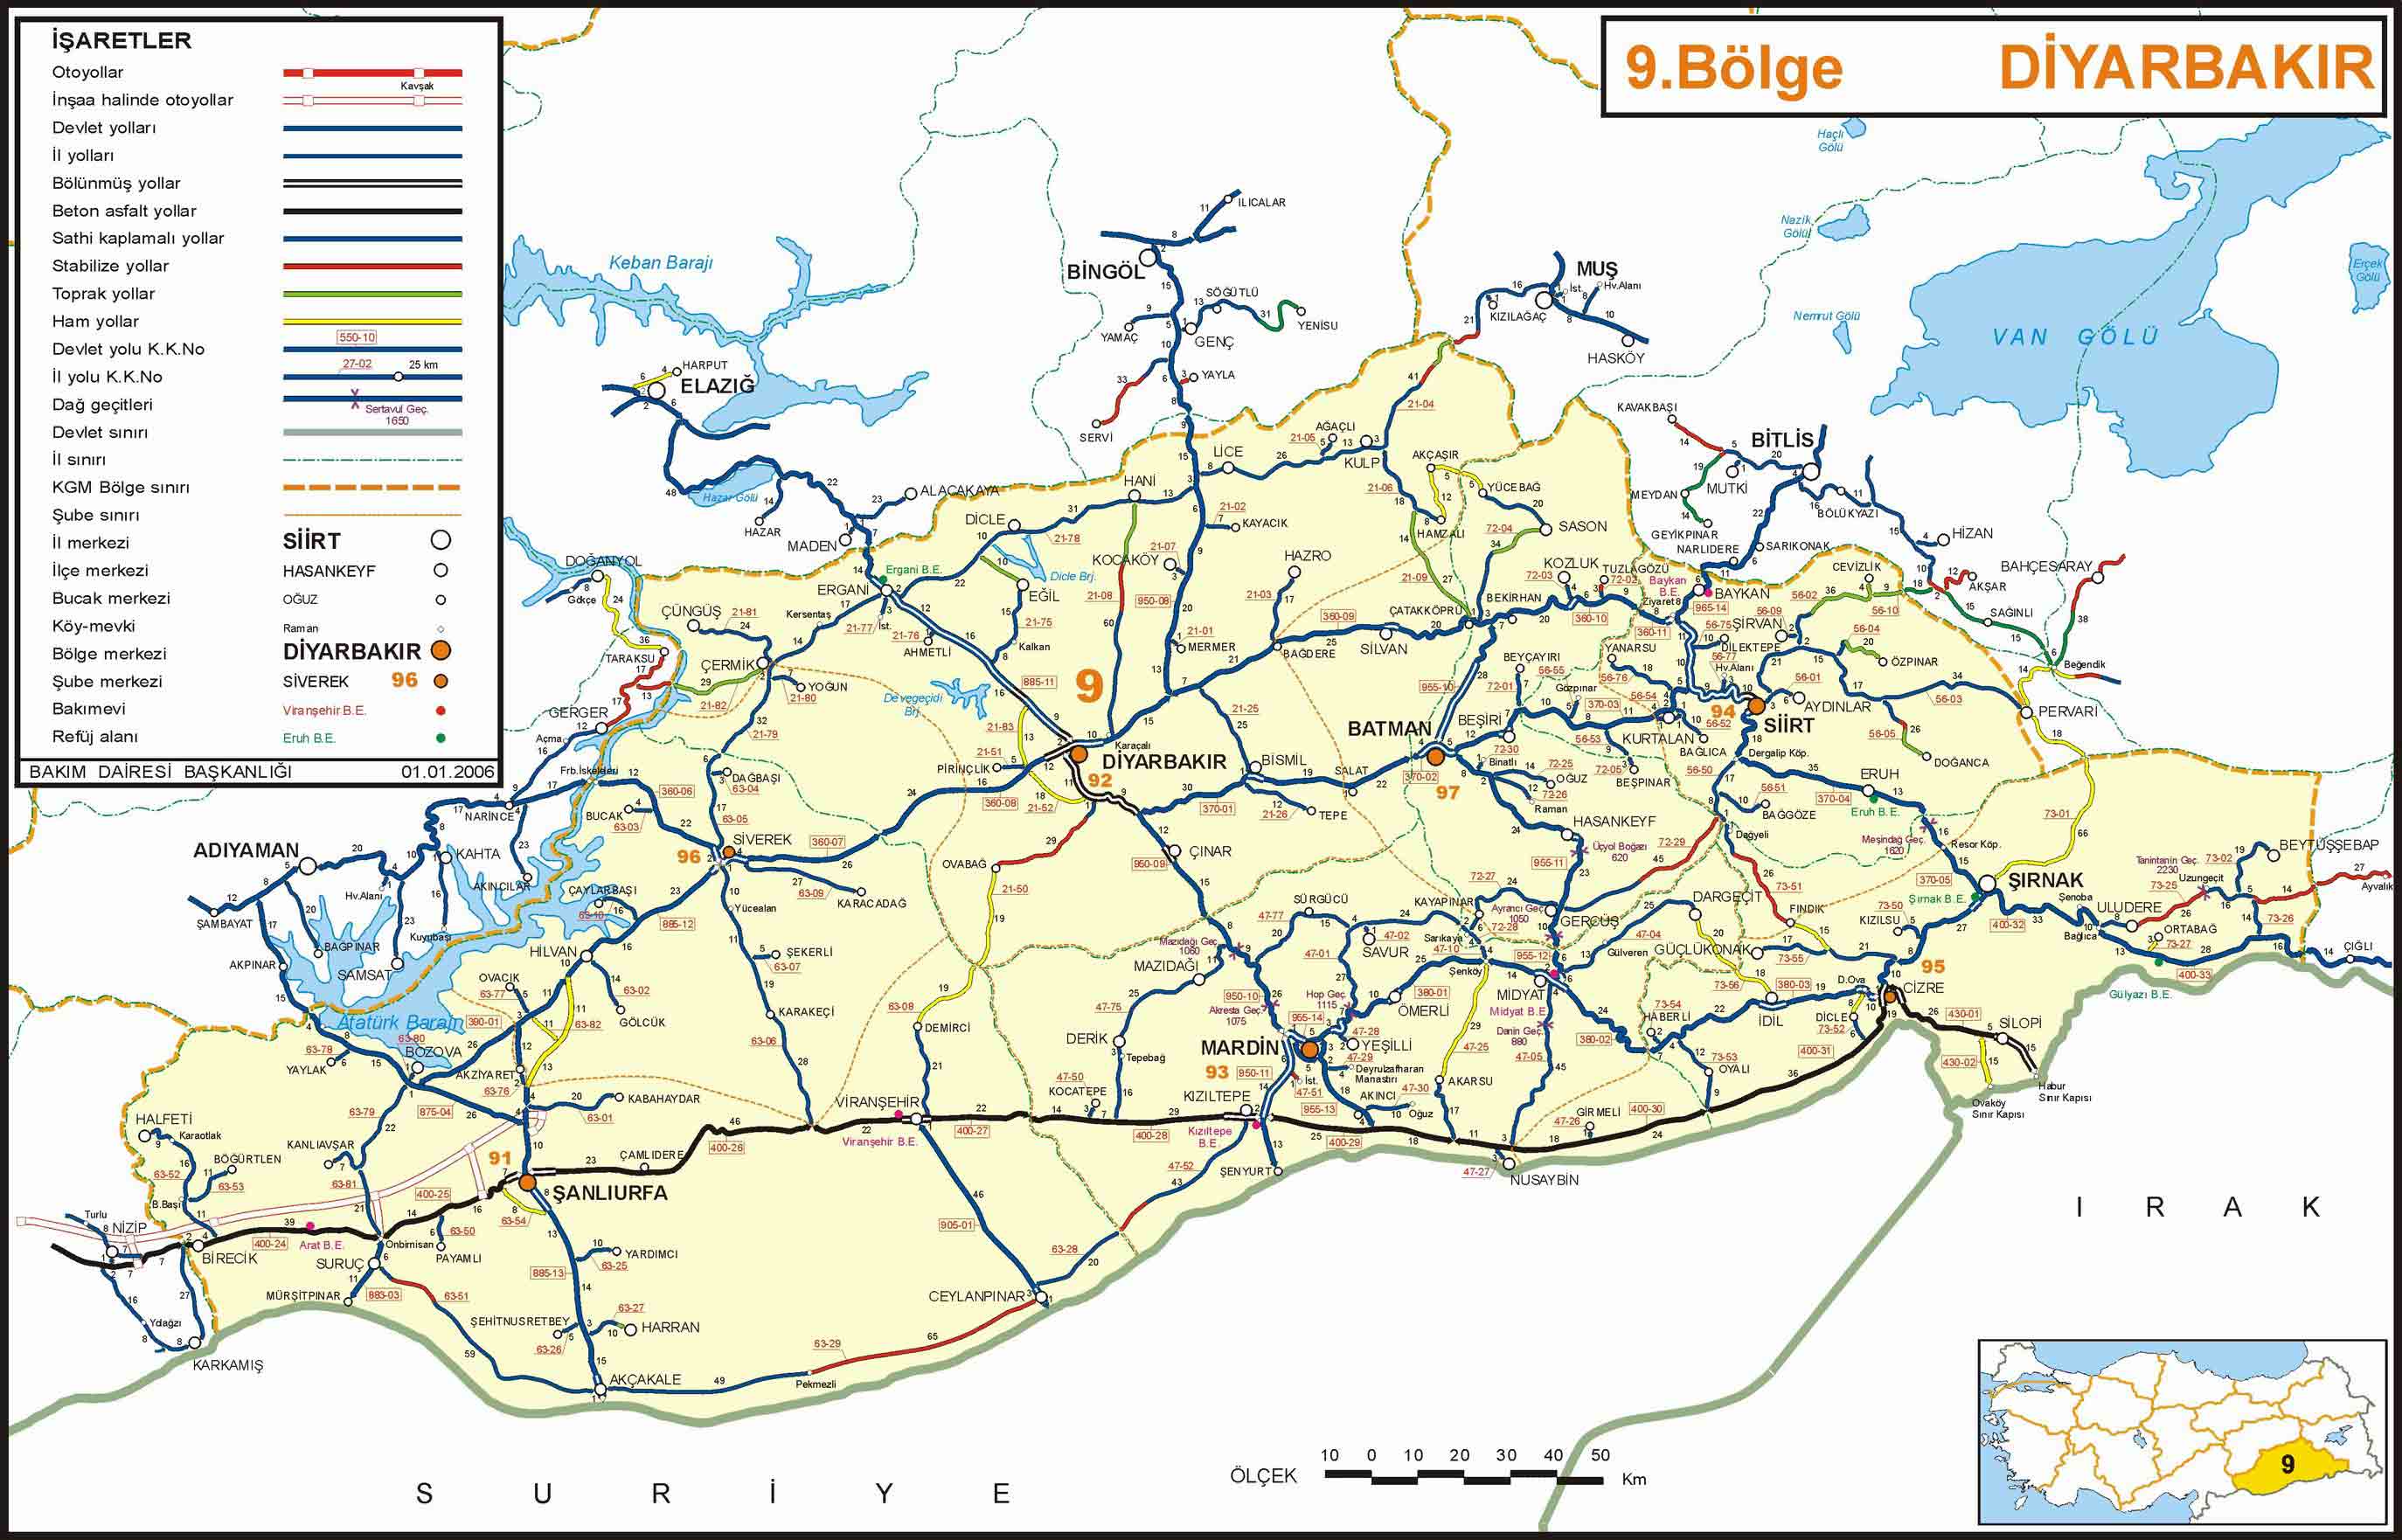 diyarbakir road map